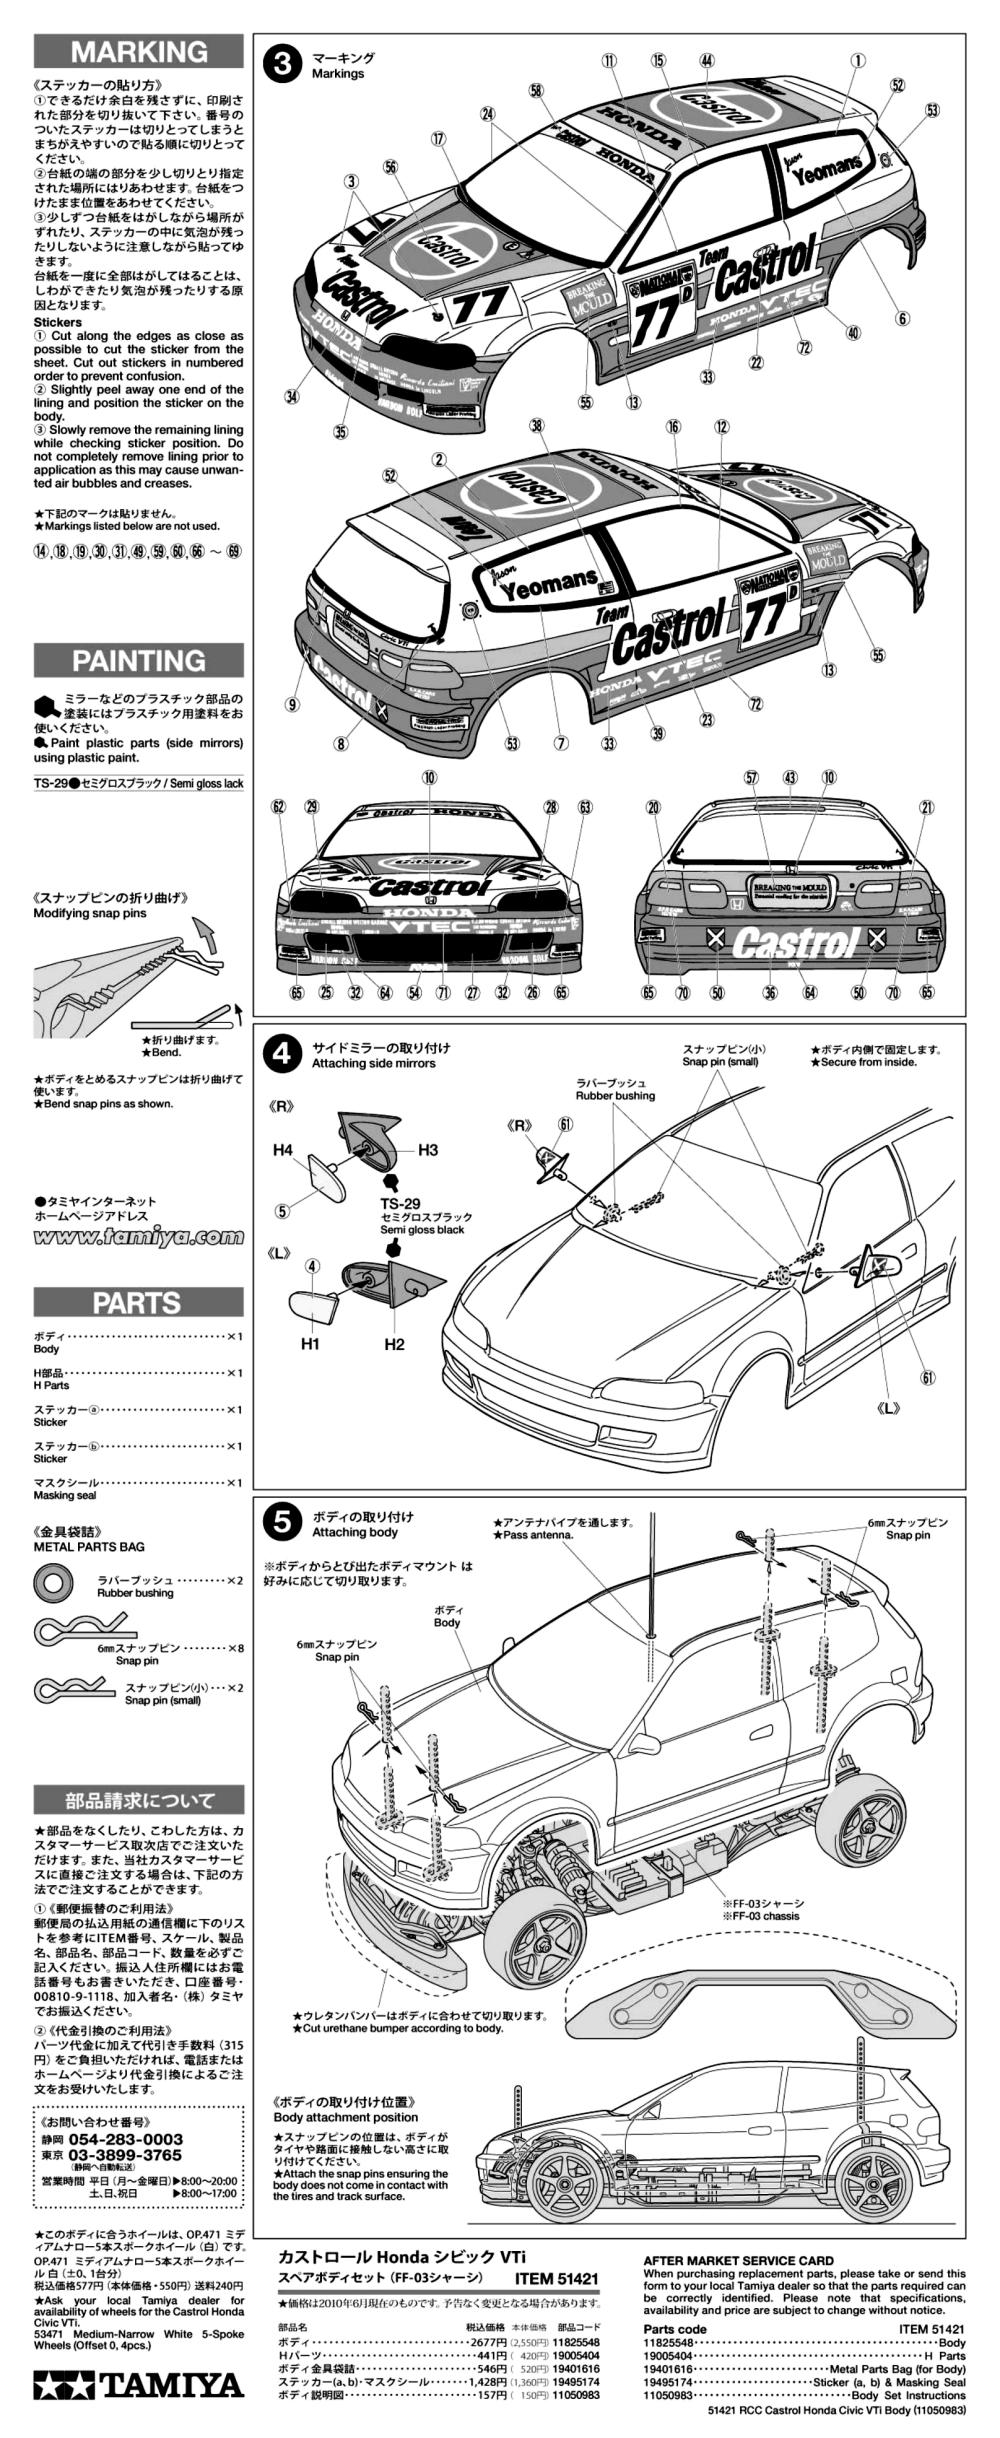 Tamiya - Castrol Honda Civic VTi - Body - Manual - Page 2